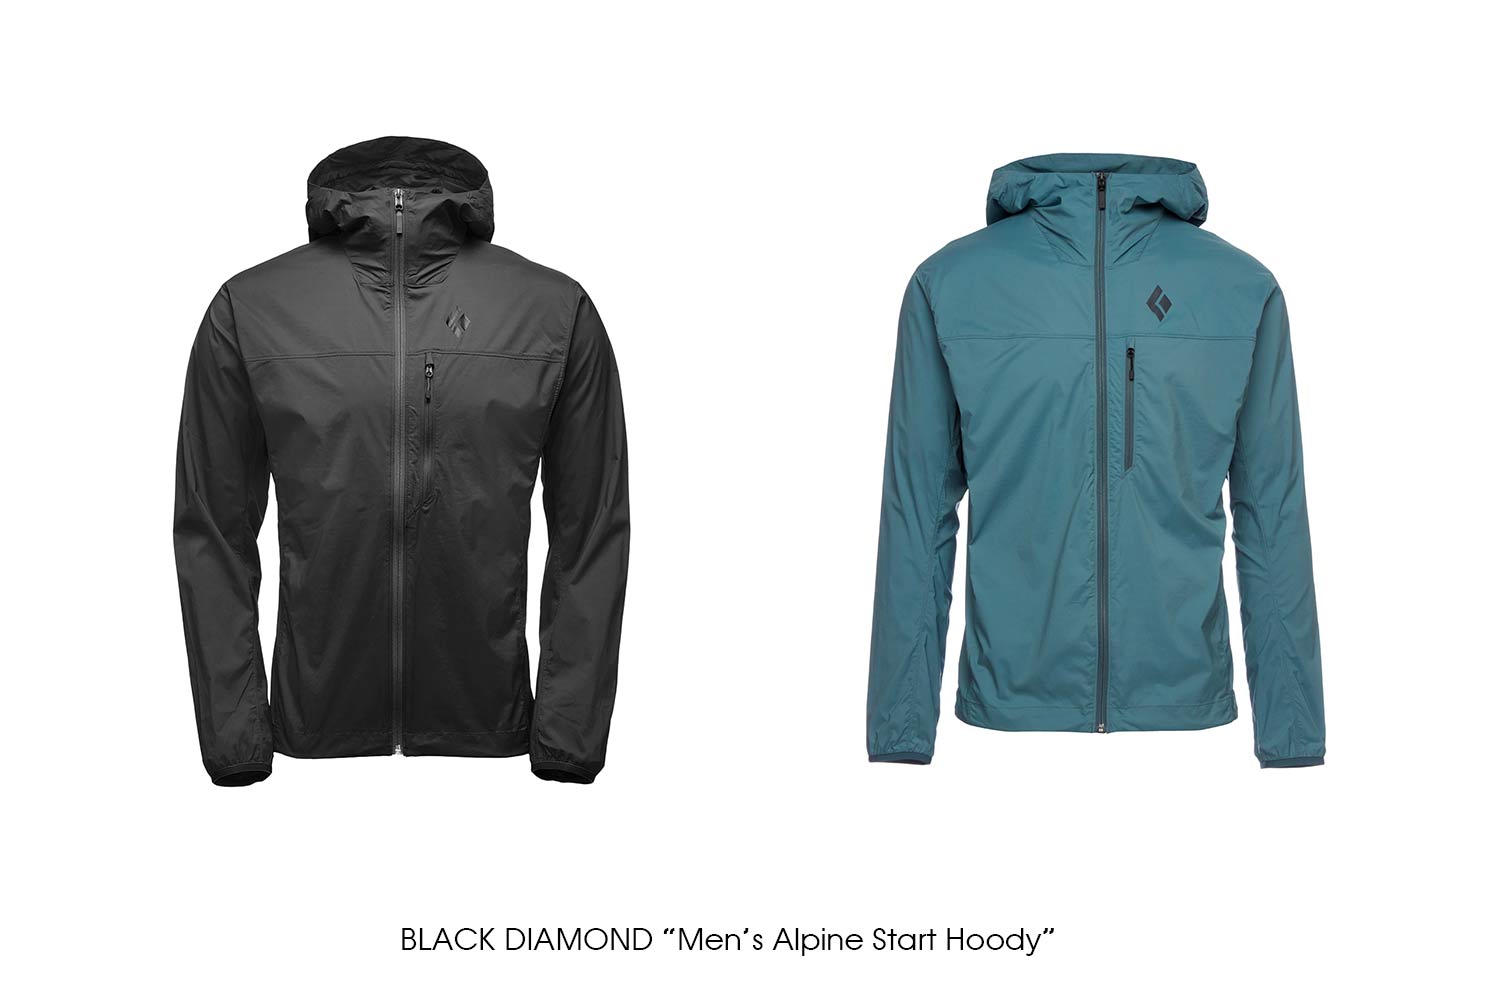 BLACK DIAMOND "Men's Alpine Start Hoody"